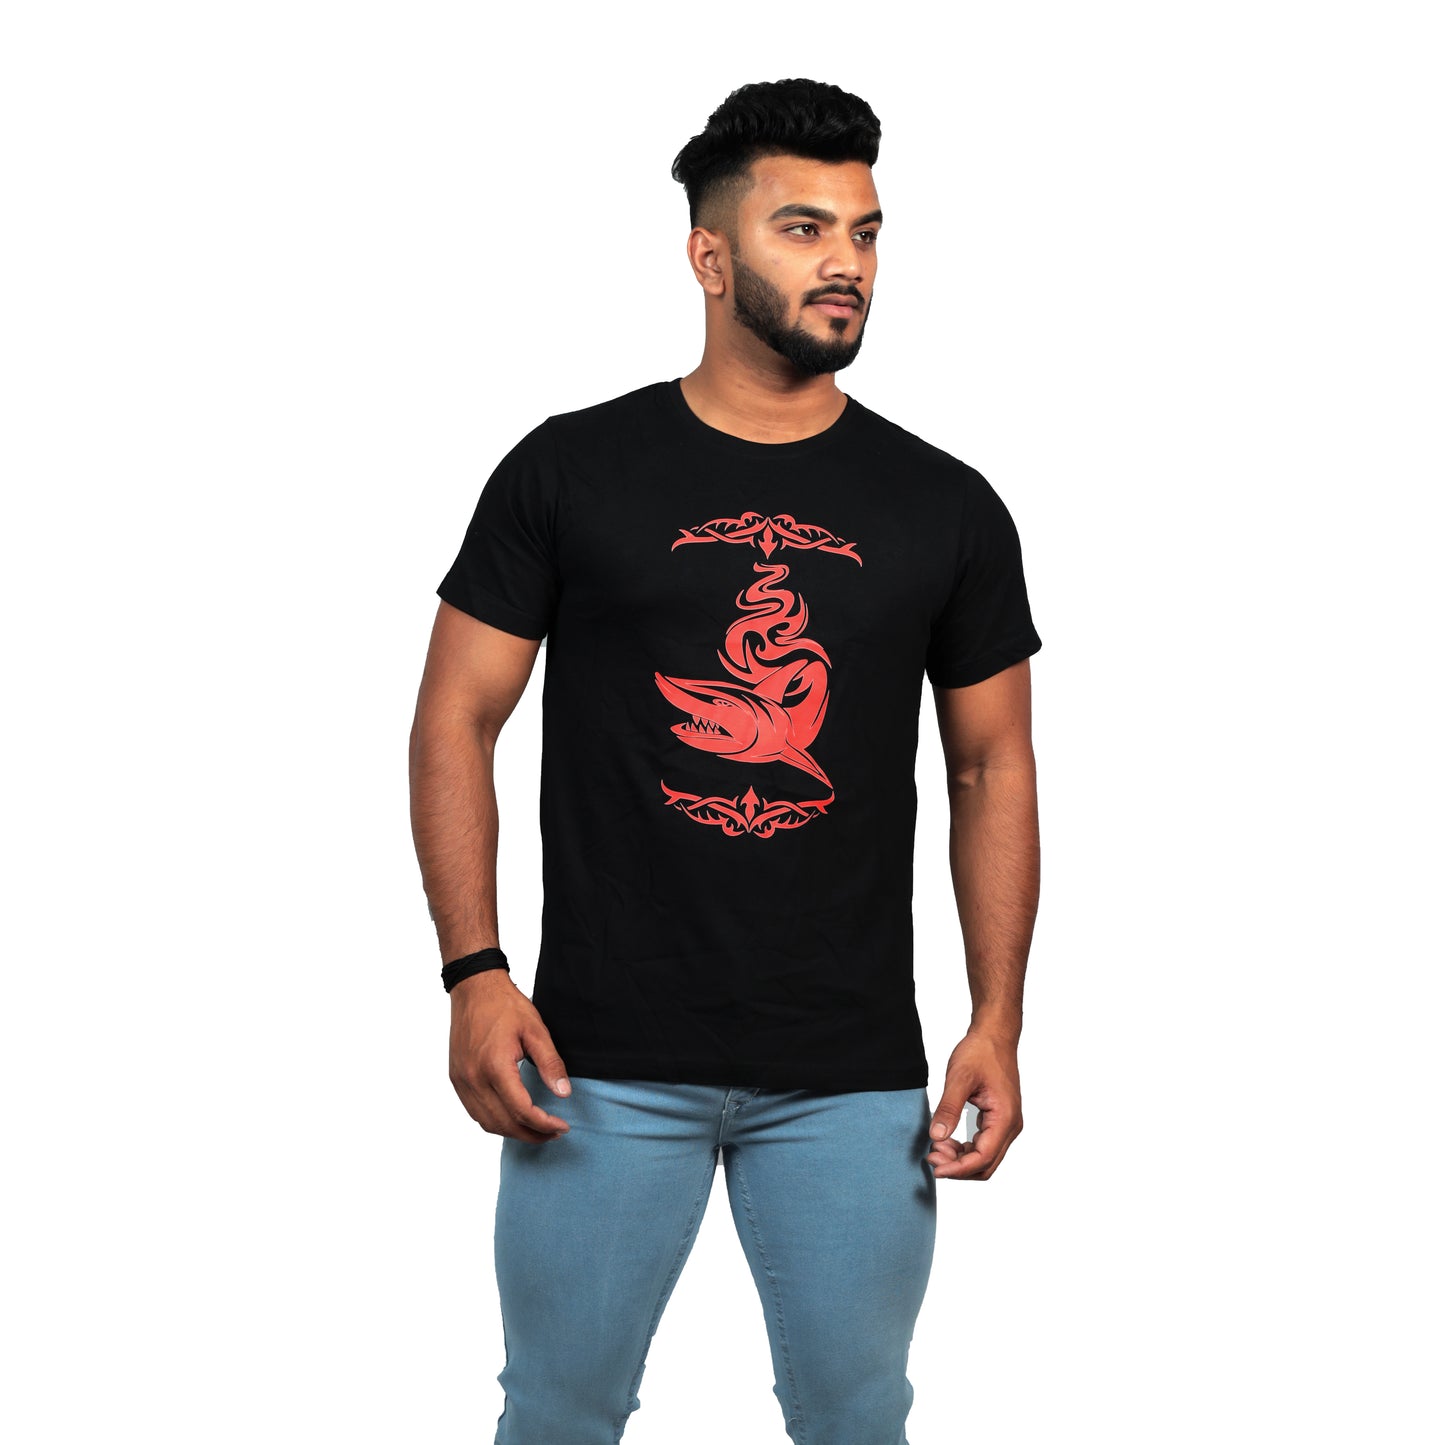 Shark Tribe Printed T-Shirt for Men Black Color